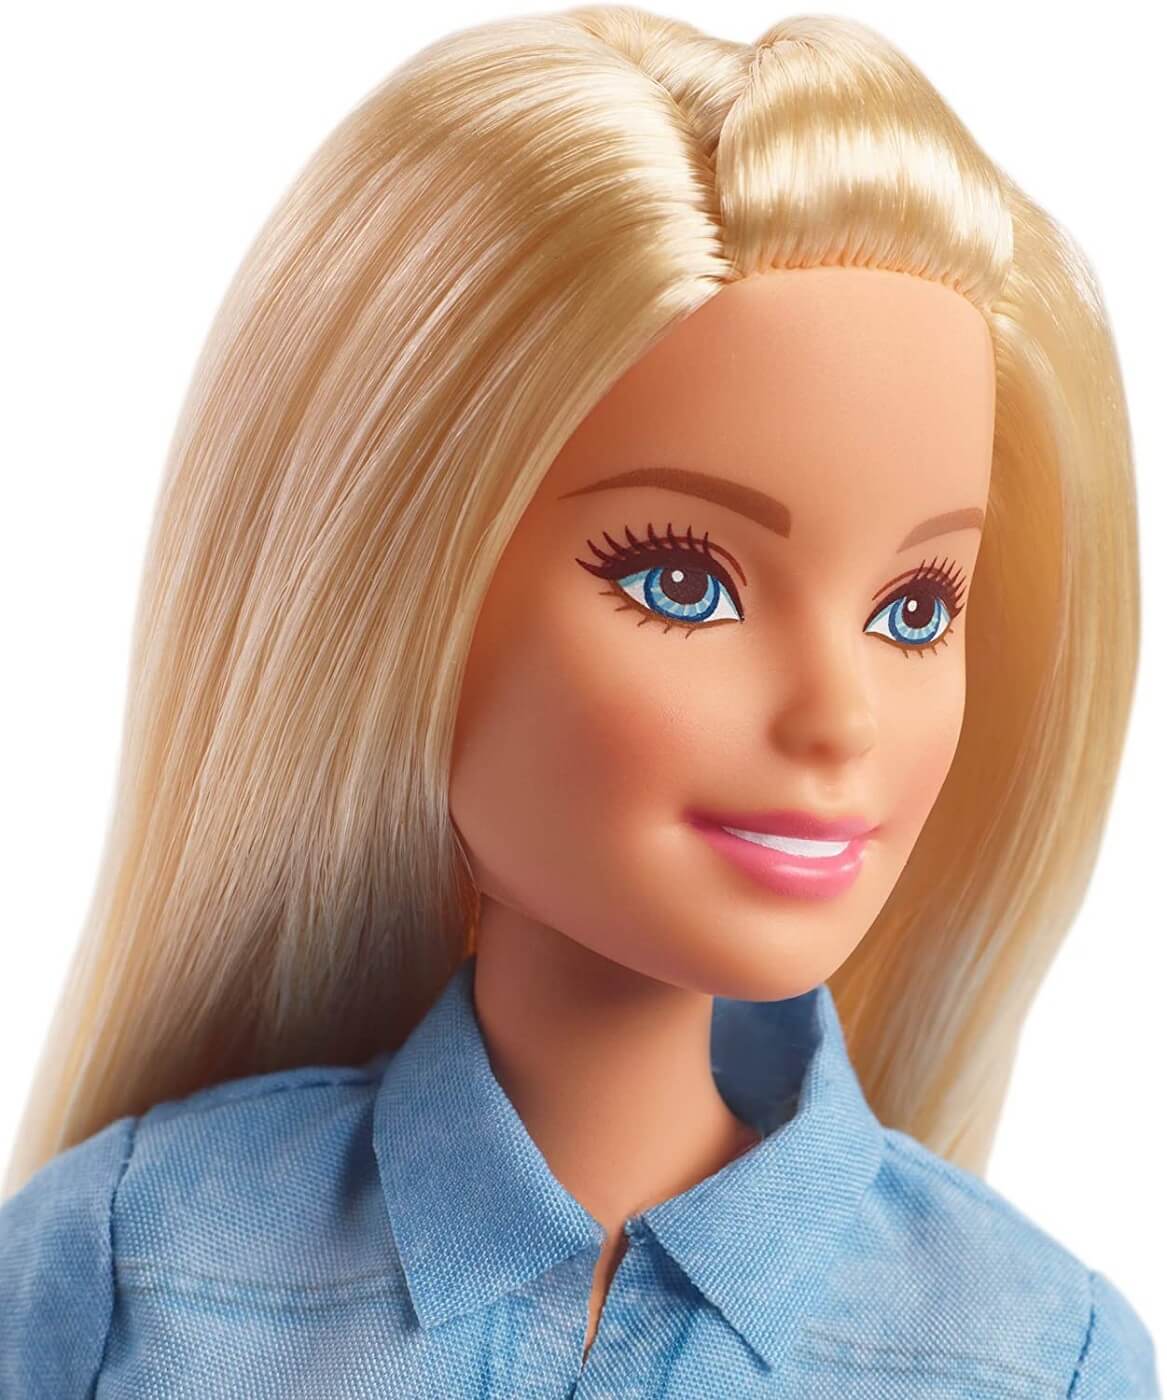 Barbie Dreamhouse Adventure rubia con vestido vaquero ( Mattel GHR58 ) imagen b